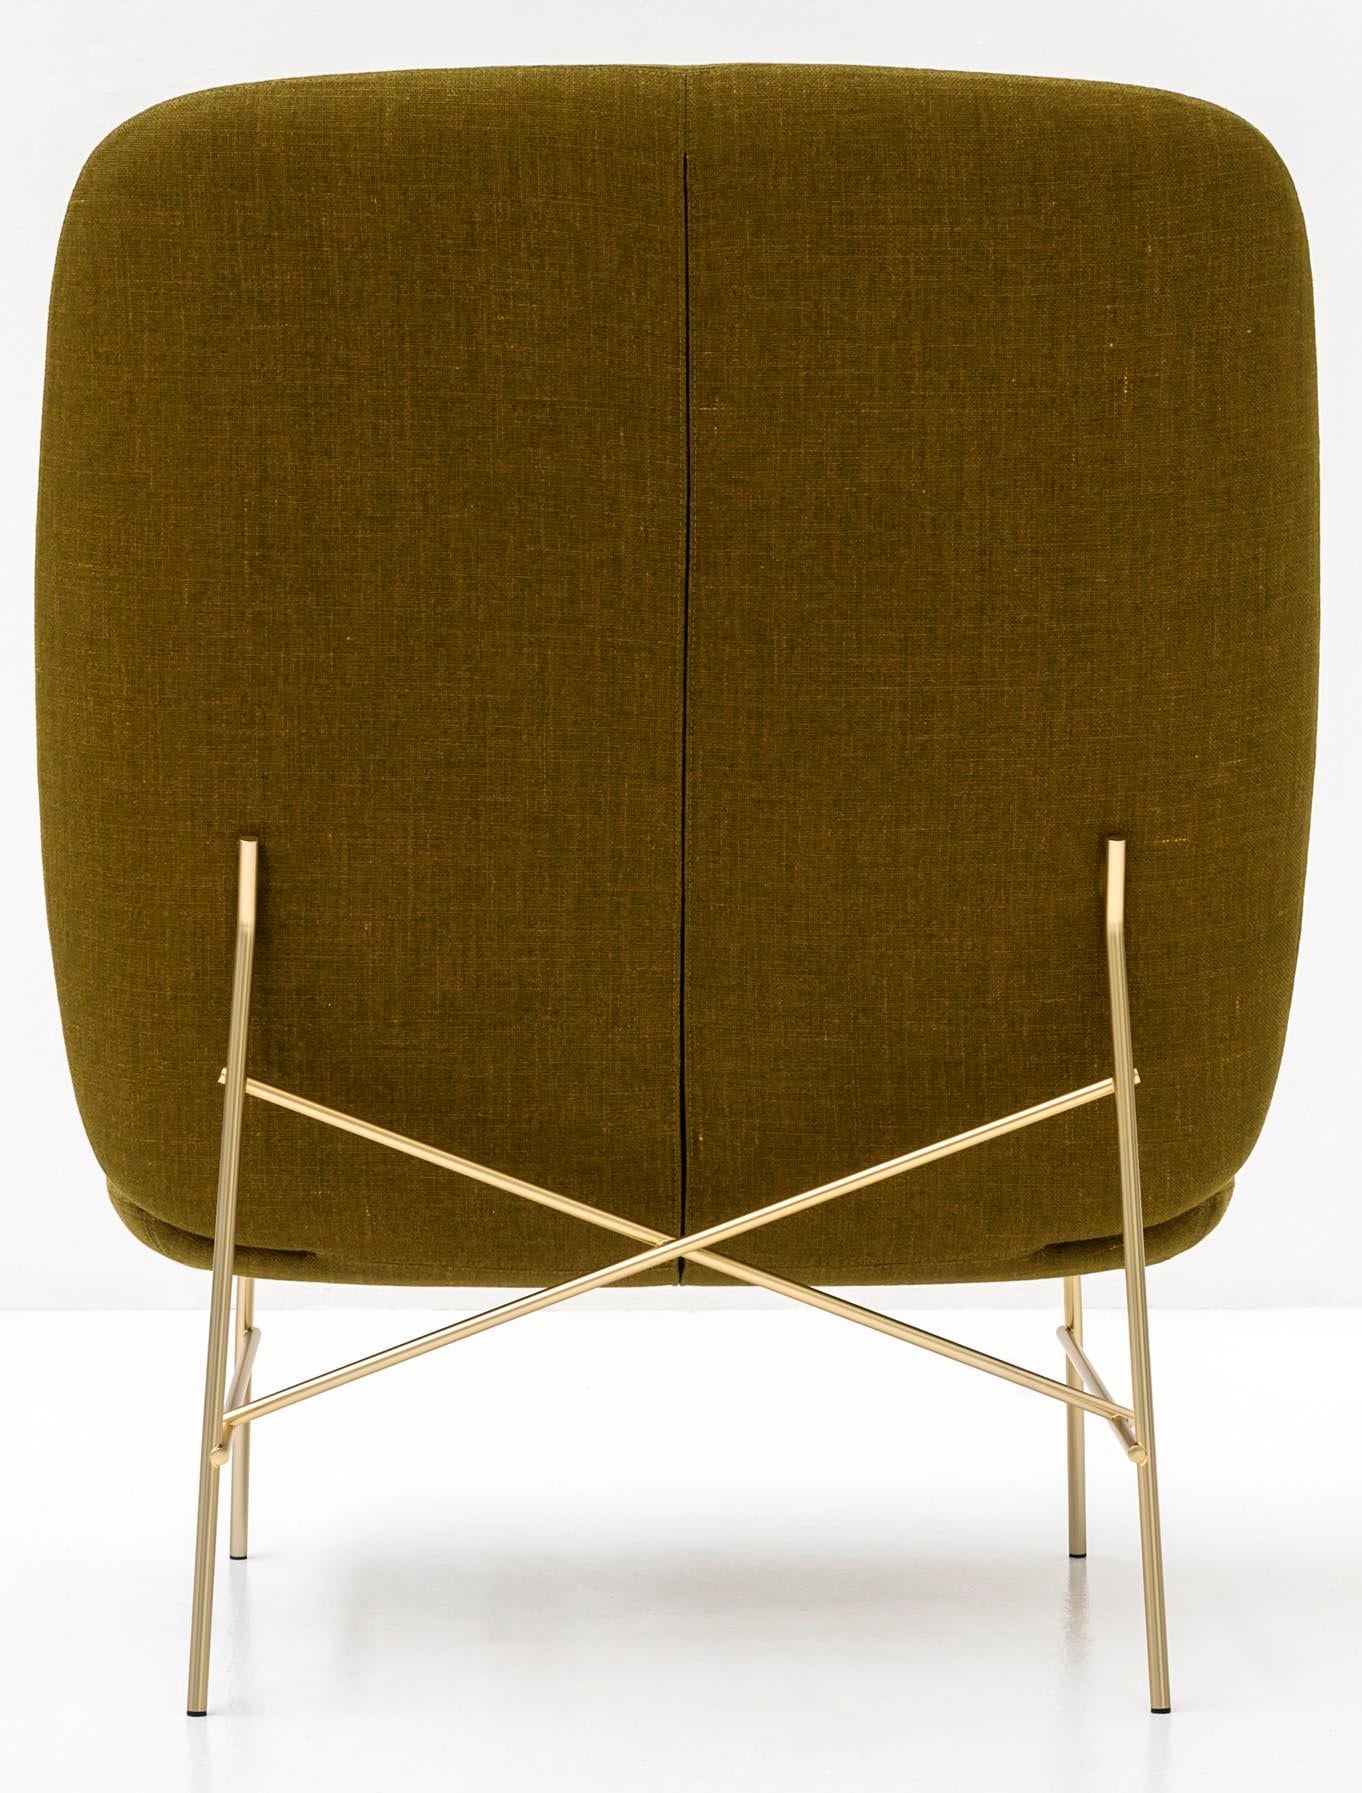 Customizable Tacchini Kelly H-Chair Designed by Claesson Koivisto Rune 1